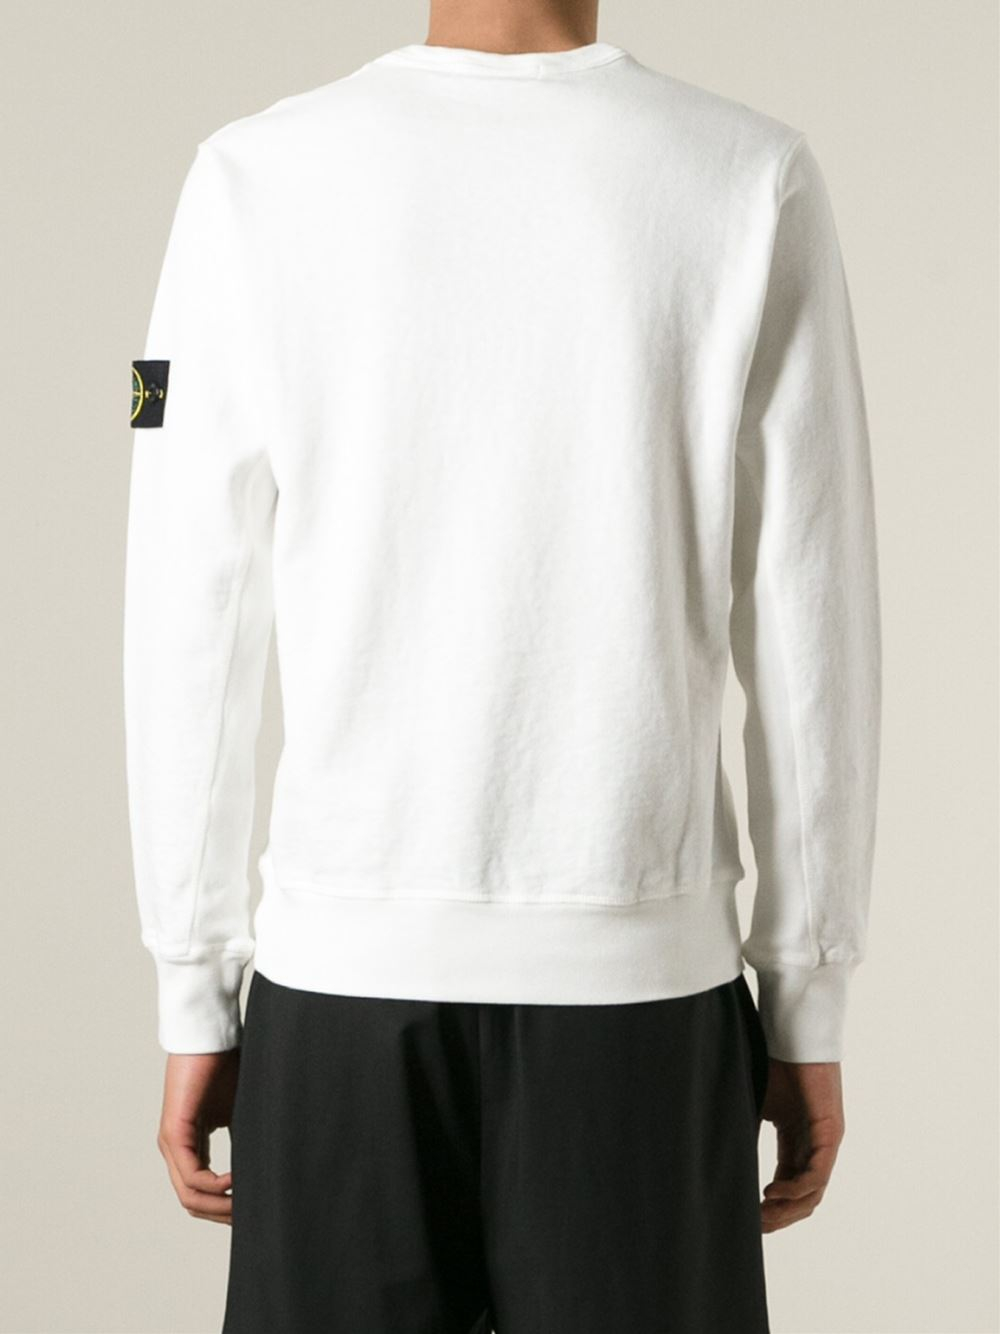 Stone island Crew Neck Sweatshirt in White for Men | Lyst